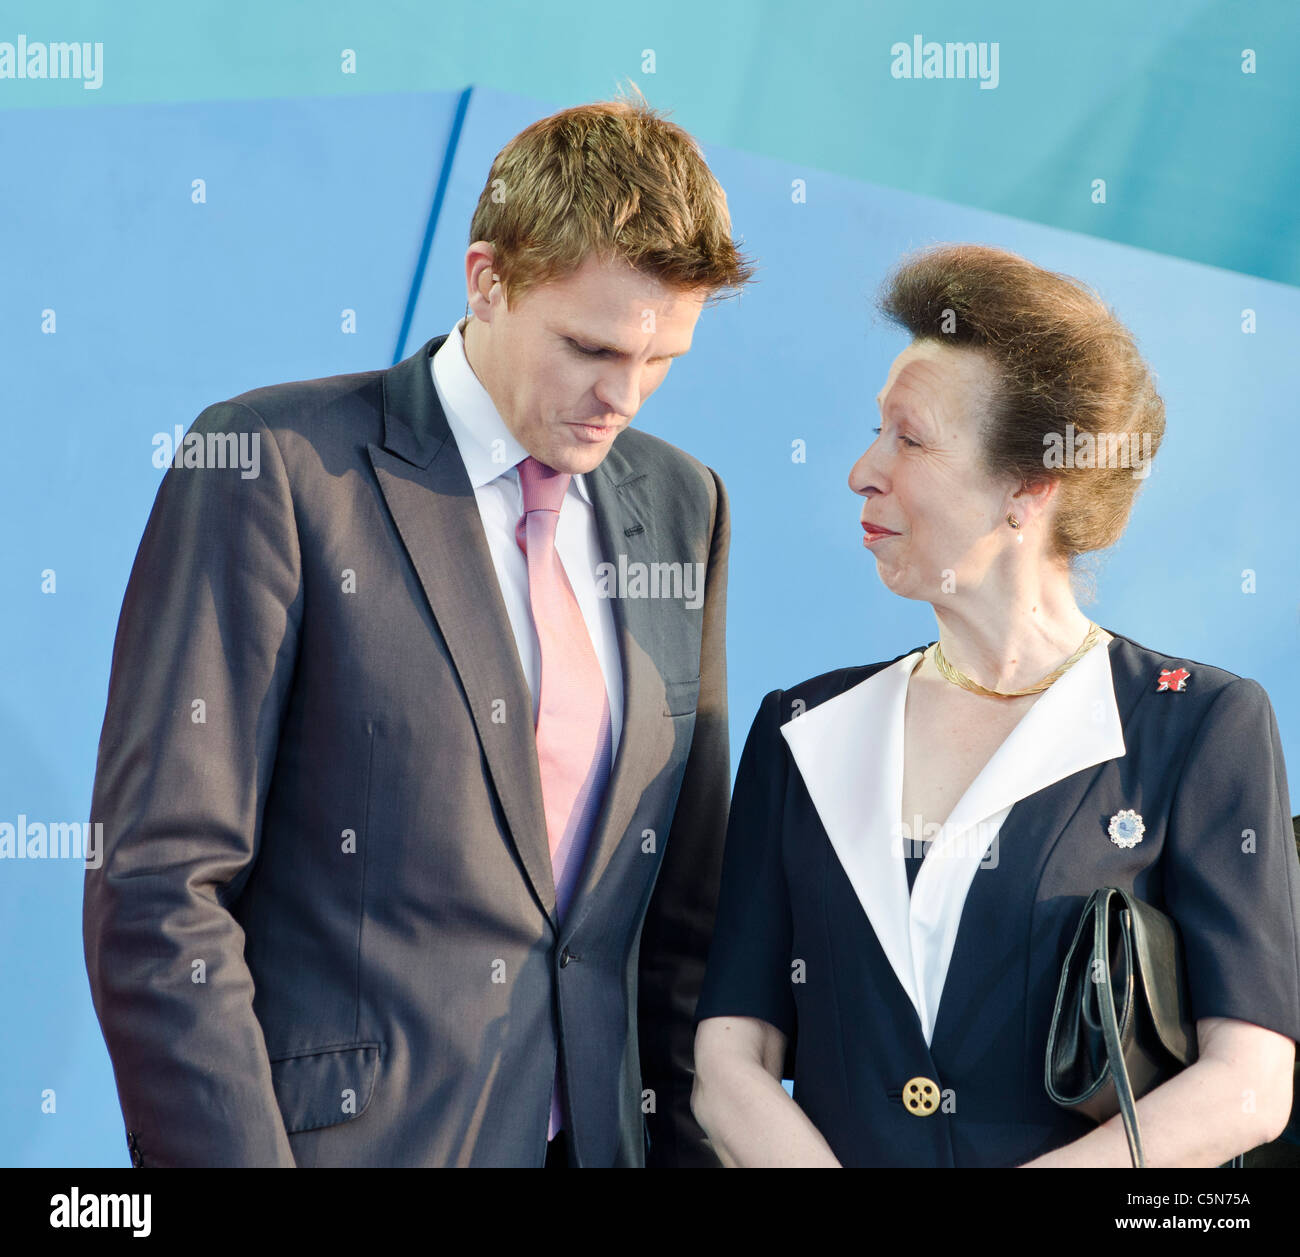 Princess Royal (Prinzessin Anne) und Jake Humphry BBC-Moderator "1 Jahr vor" London 2012 Olympics Trafalgar Square Stockfoto